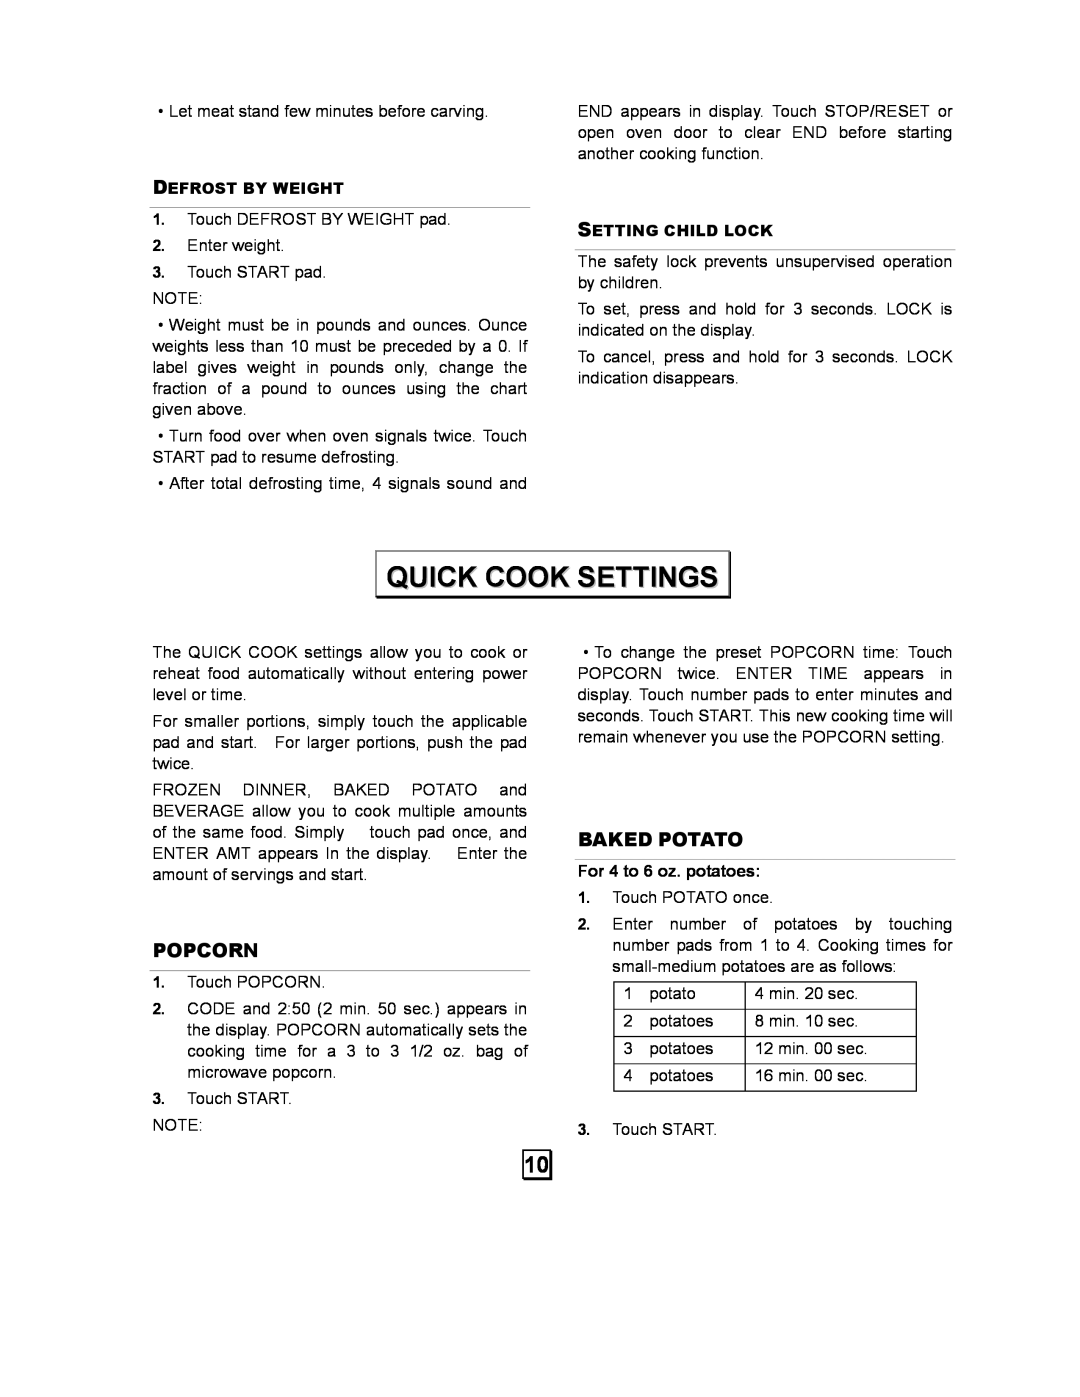 Kenmore 87103 user manual Quick Cook Settings, Popcorn, Baked Potato 